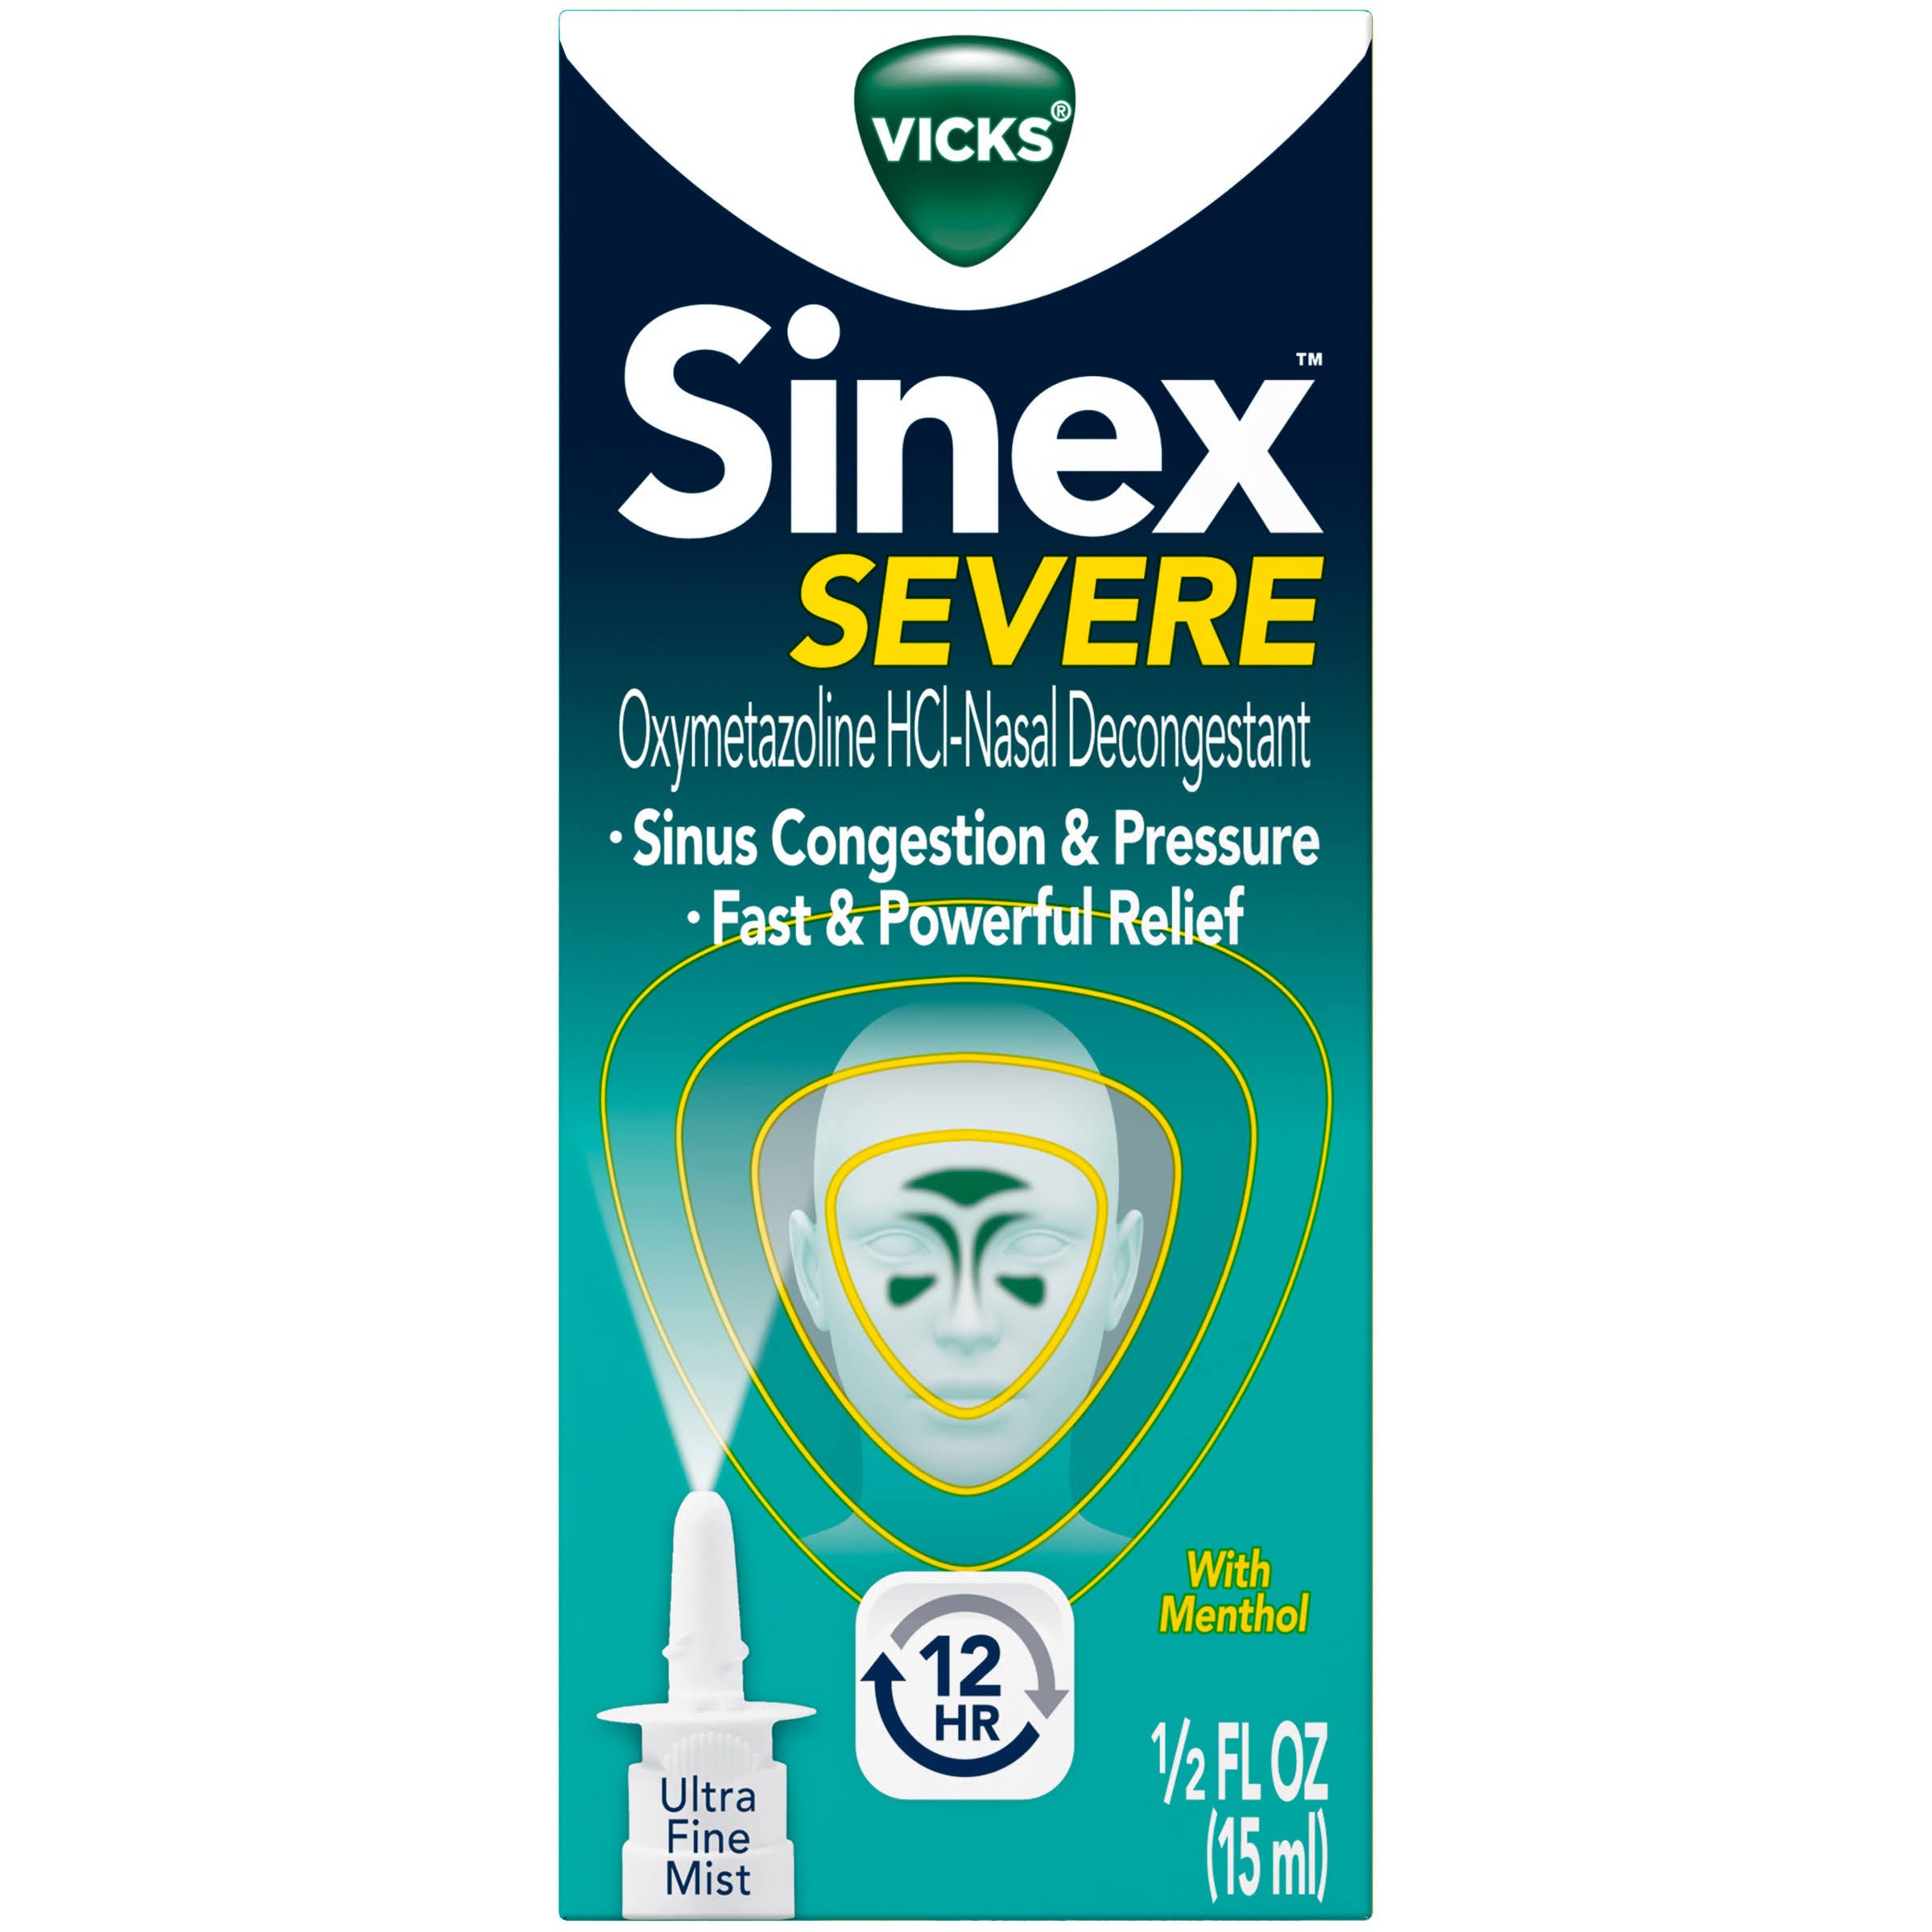 Vicks Sinex Severe Decongestant Ultra Fine Mist Nasal Spray with Menthol - 0.5 fl oz | Image